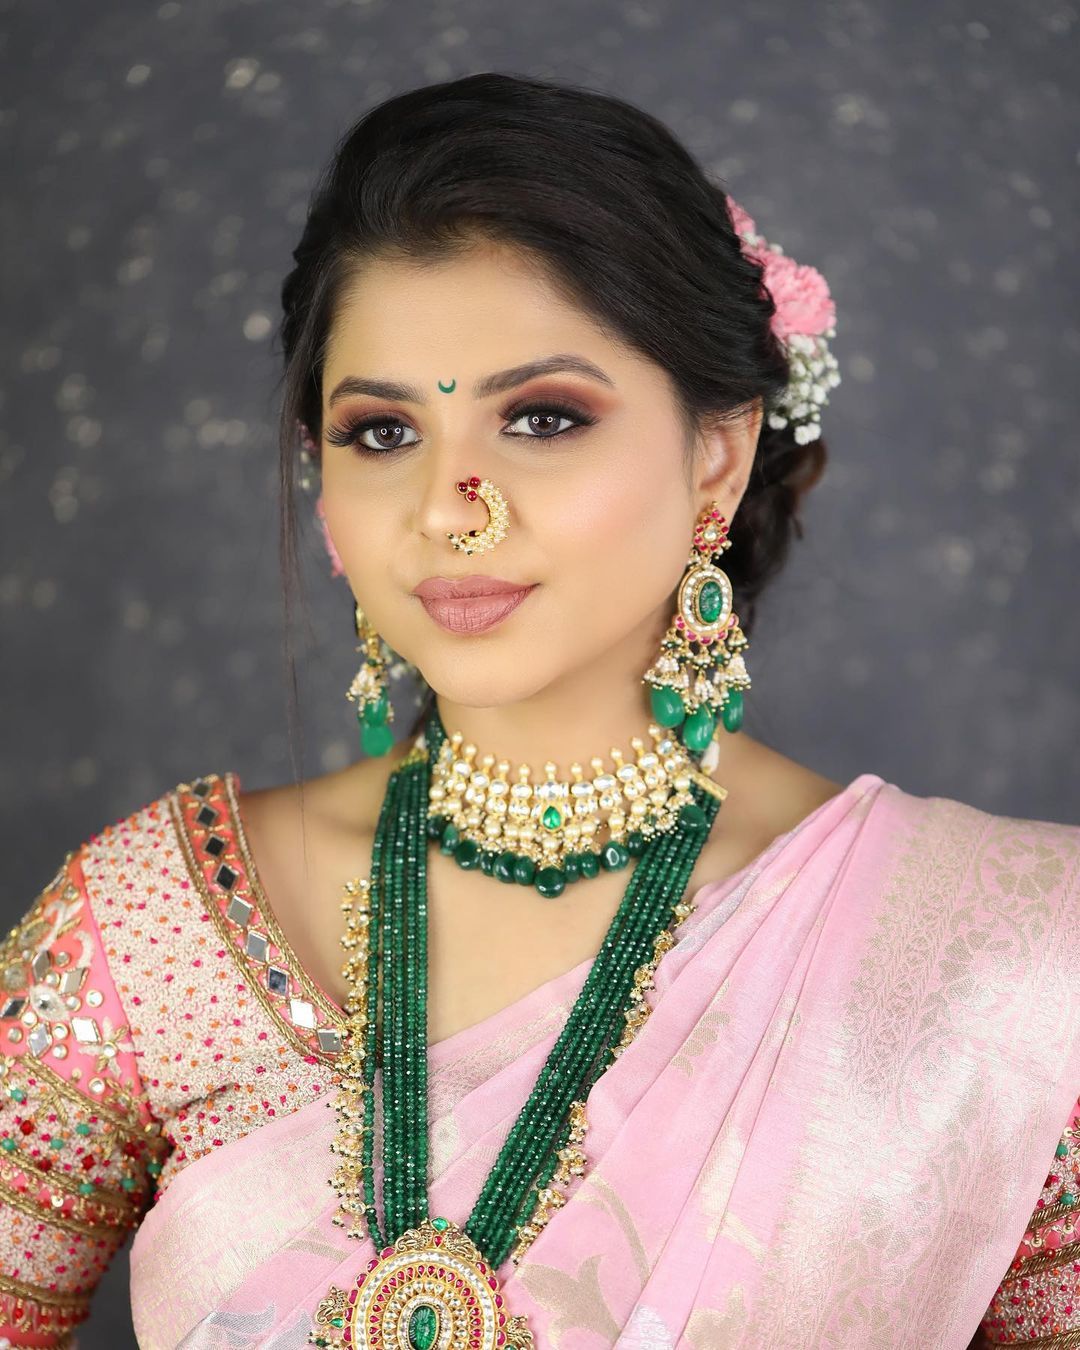 Ashwini Vasant Pujari Makeup Artist Services, Review and Info - Olready